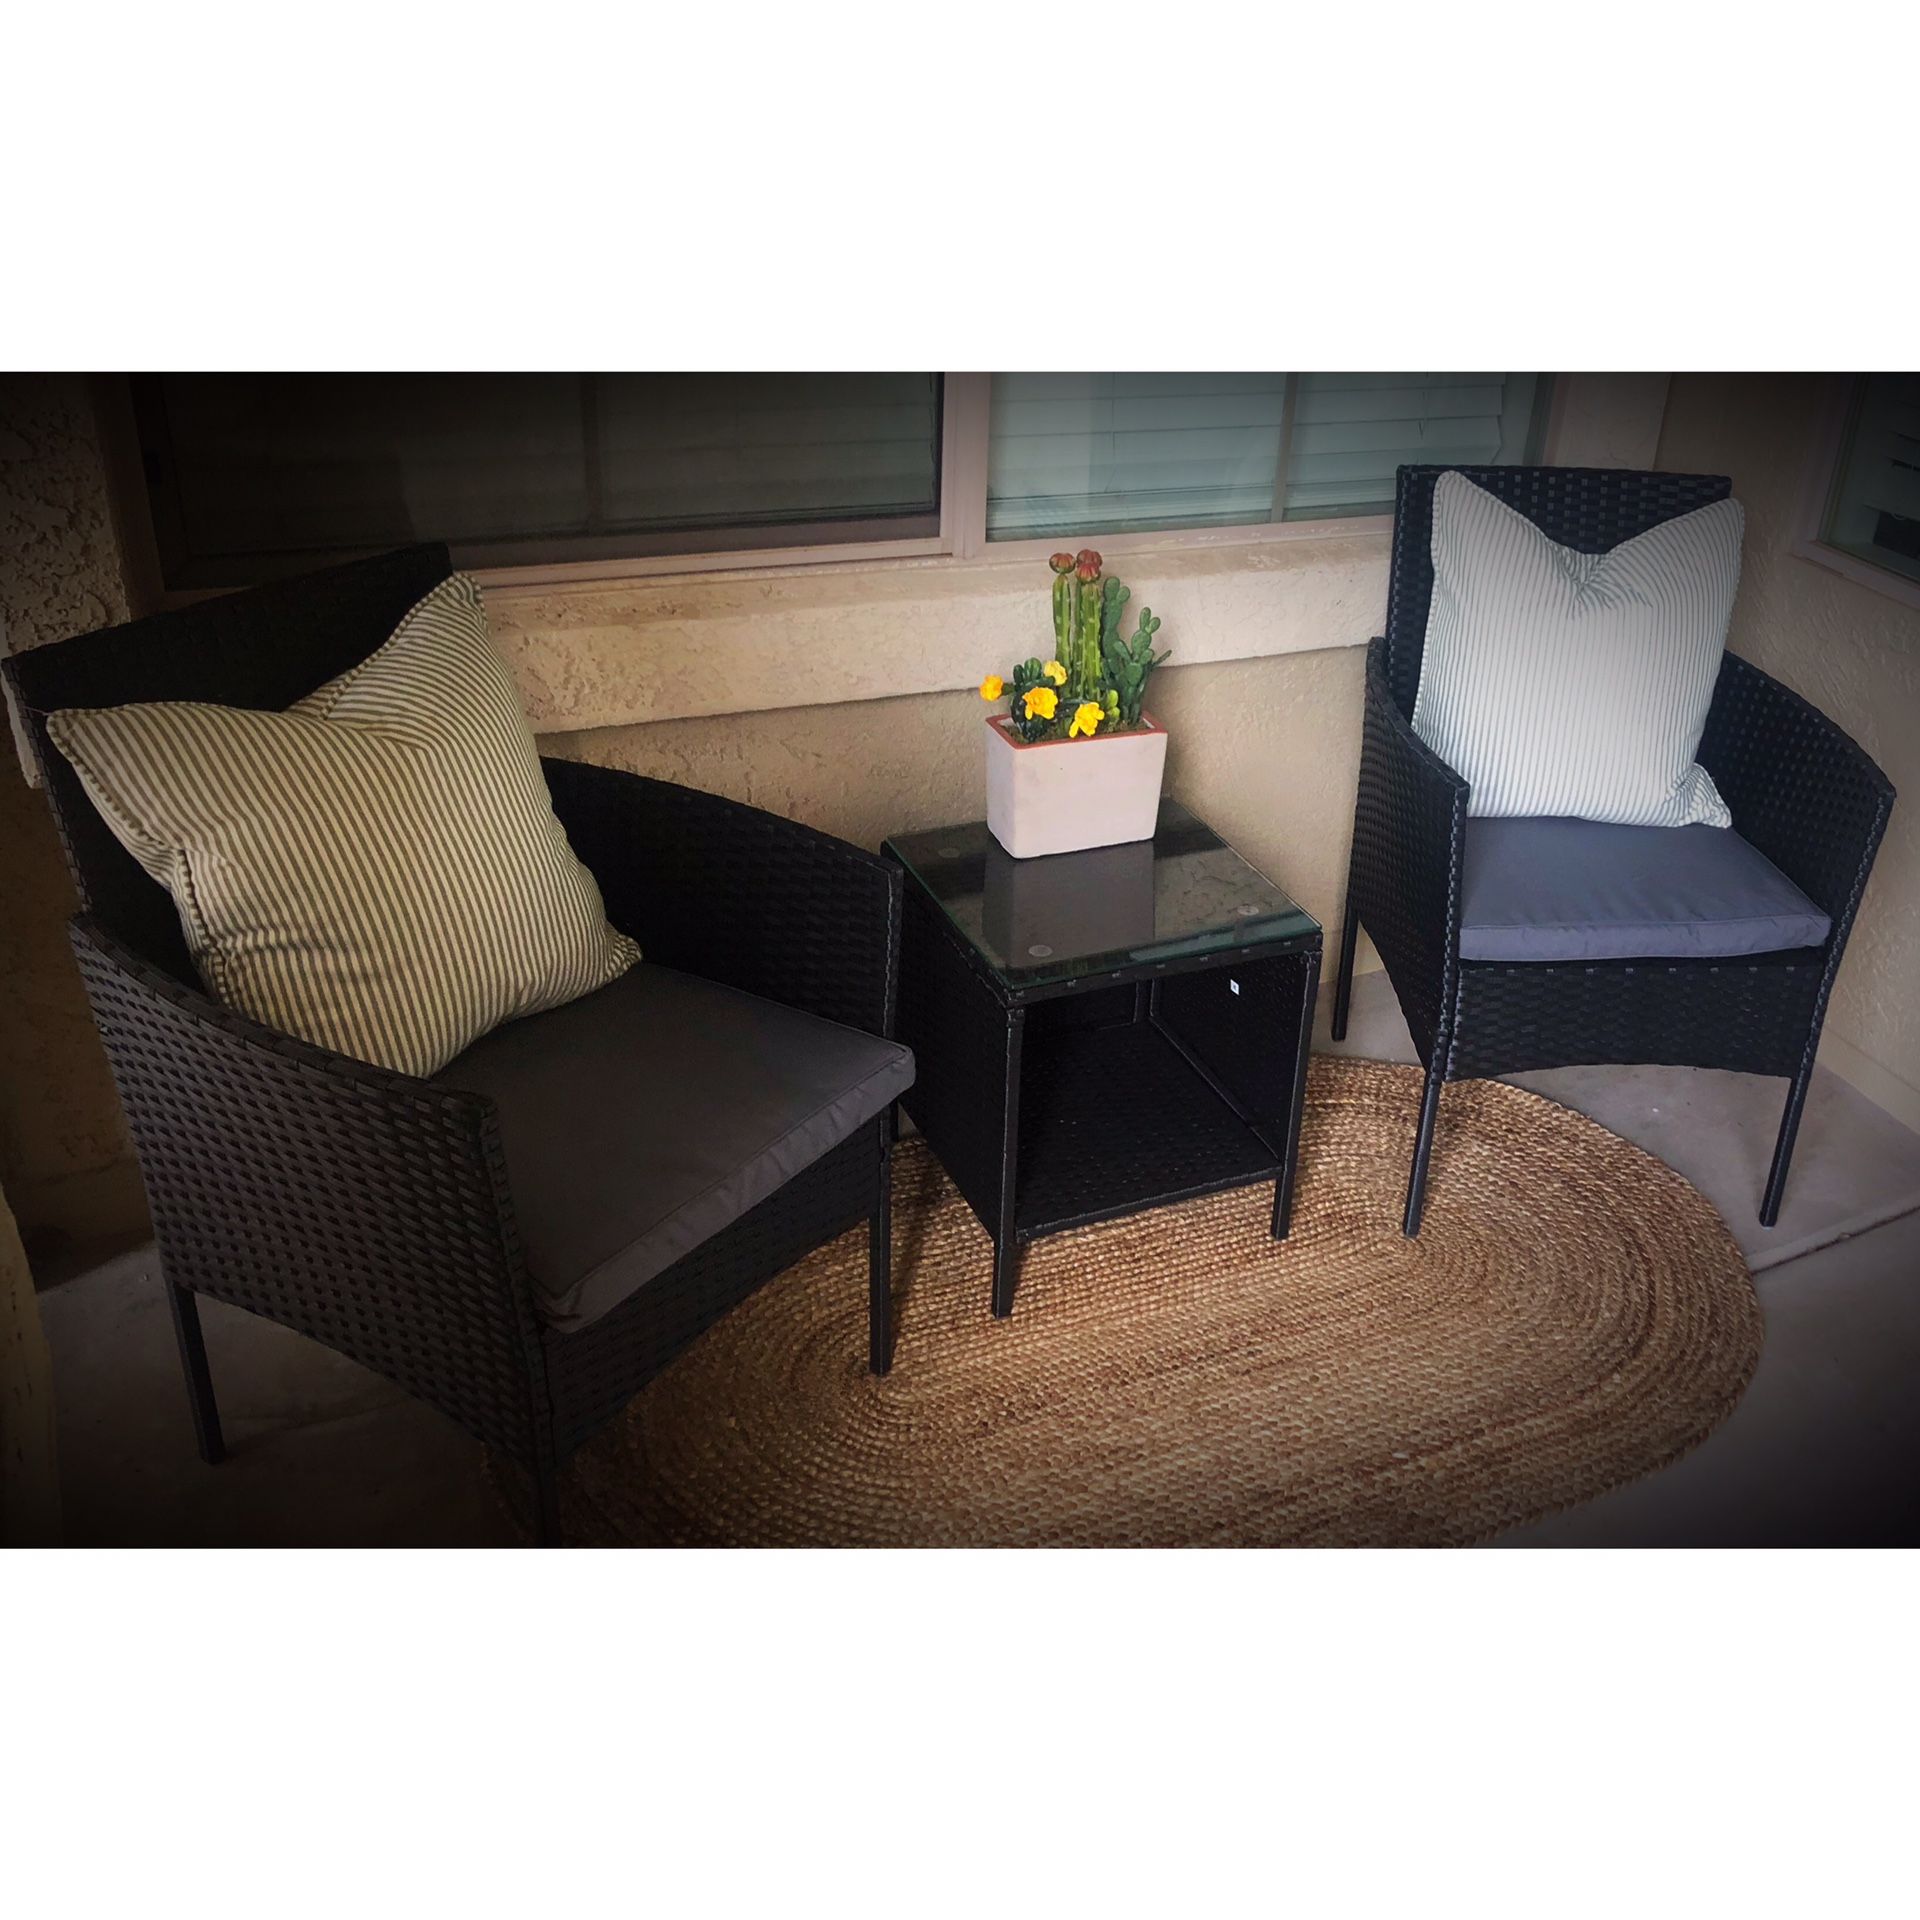 New!! Bistro set, porch set, outdoor furniture, patio set, patio furniture